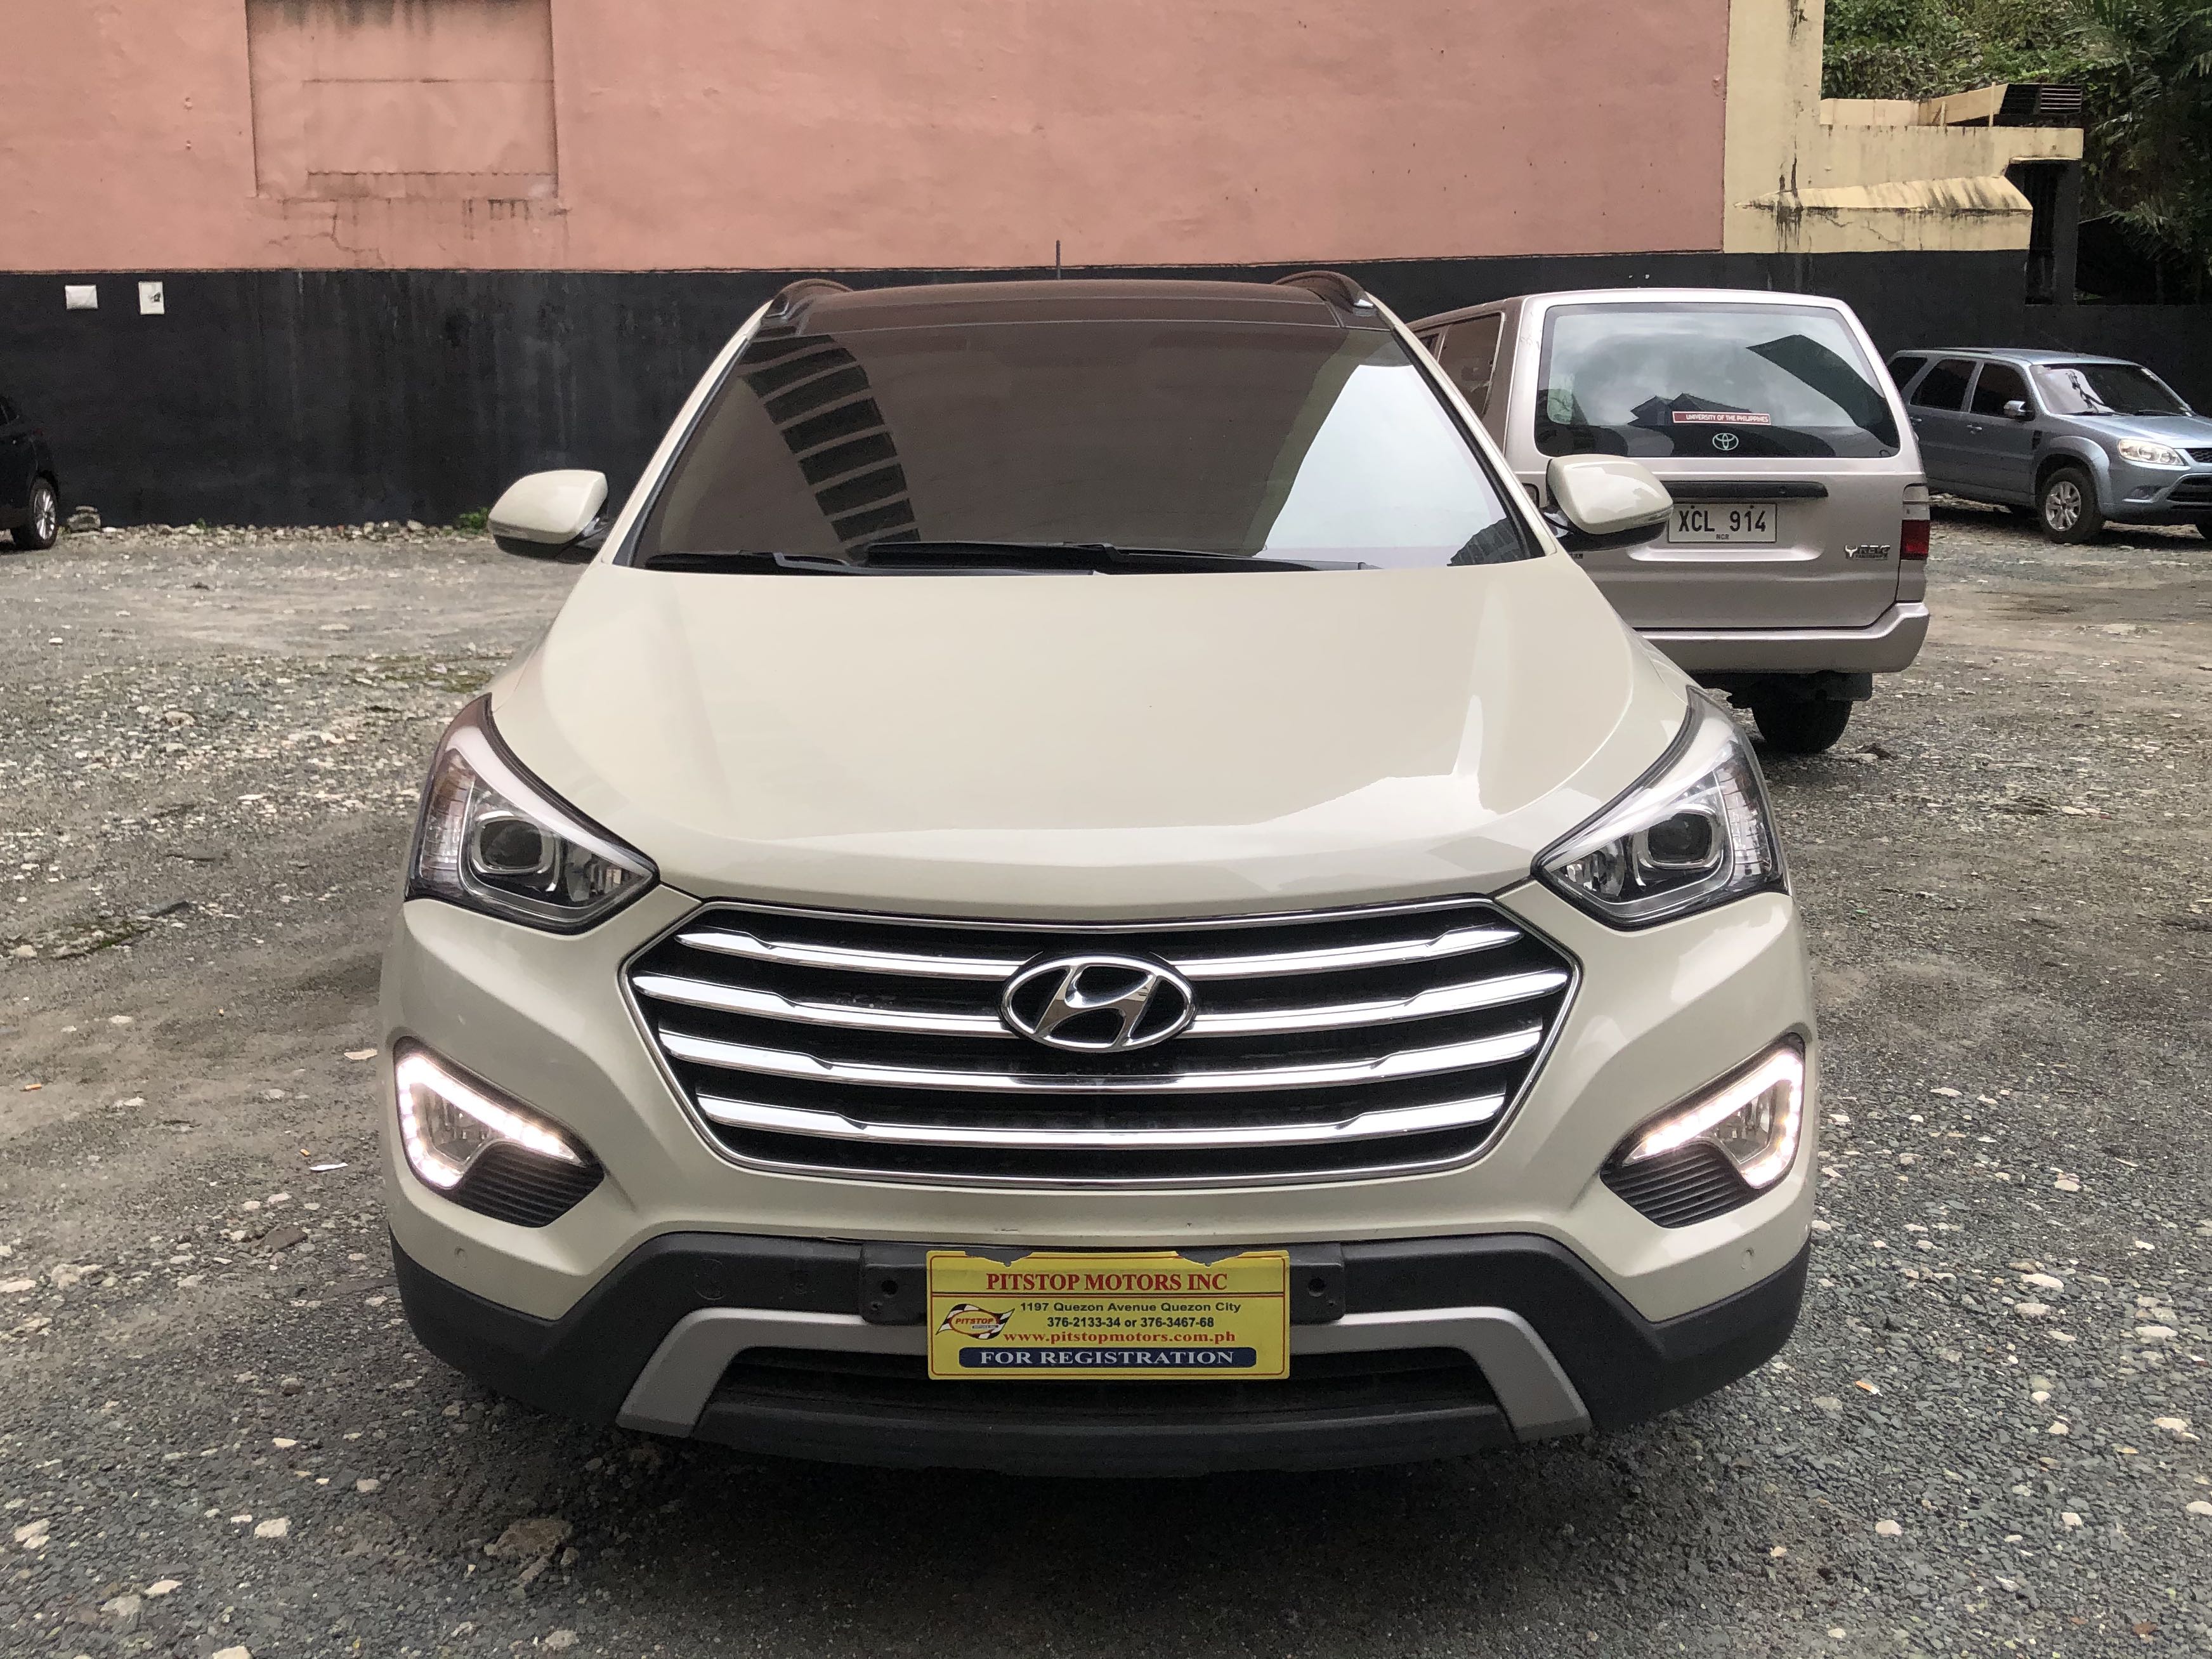 Hyundai santa cruz price philippines